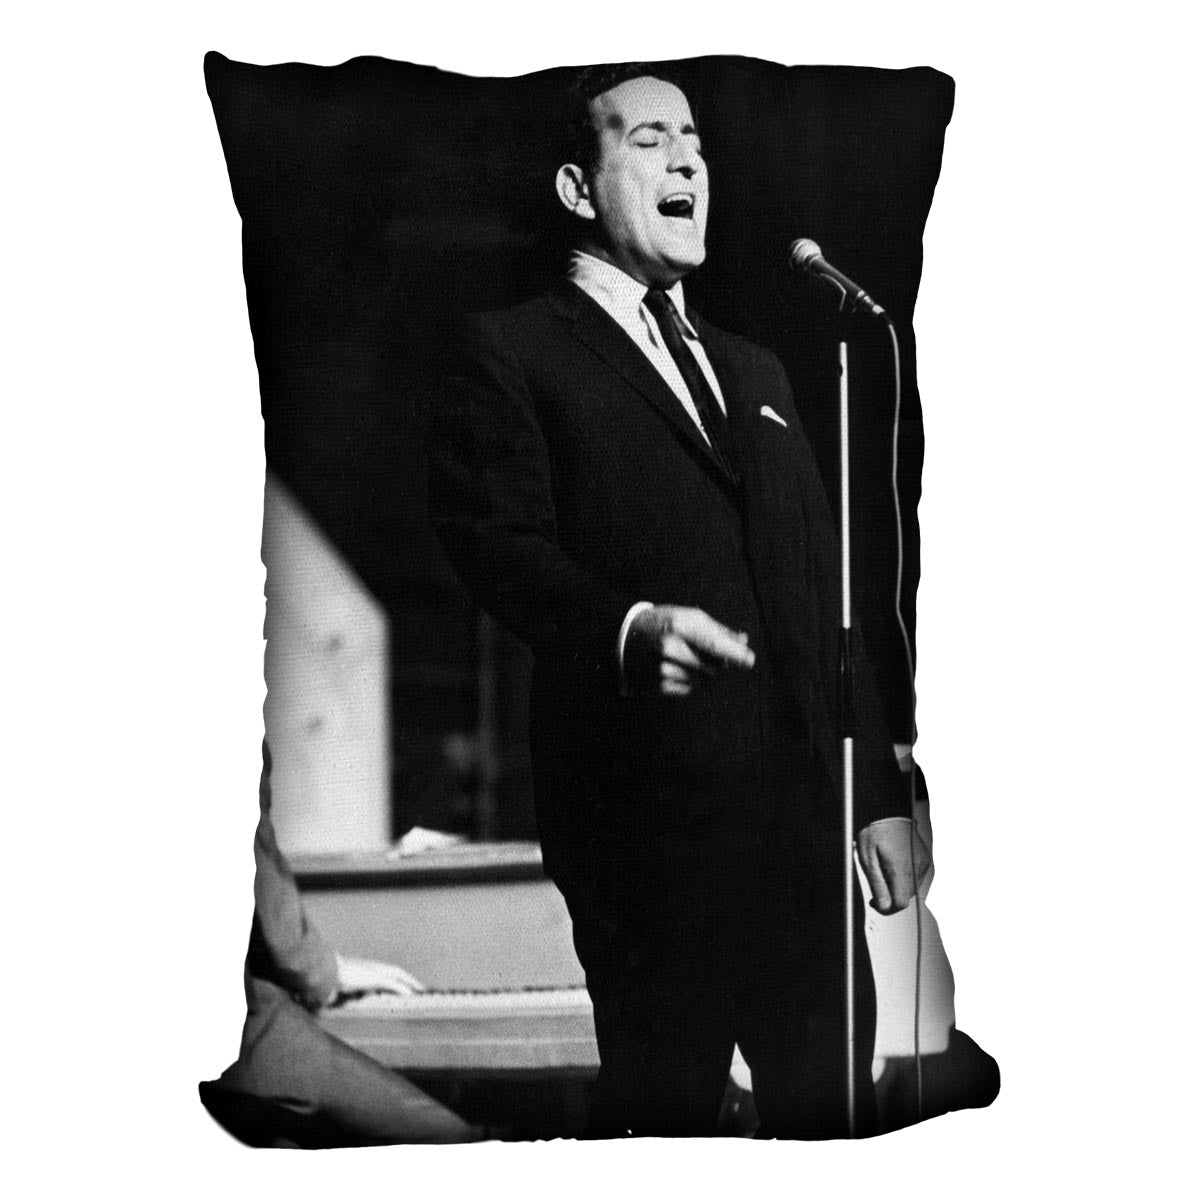 Tony Bennett in 1965 Cushion